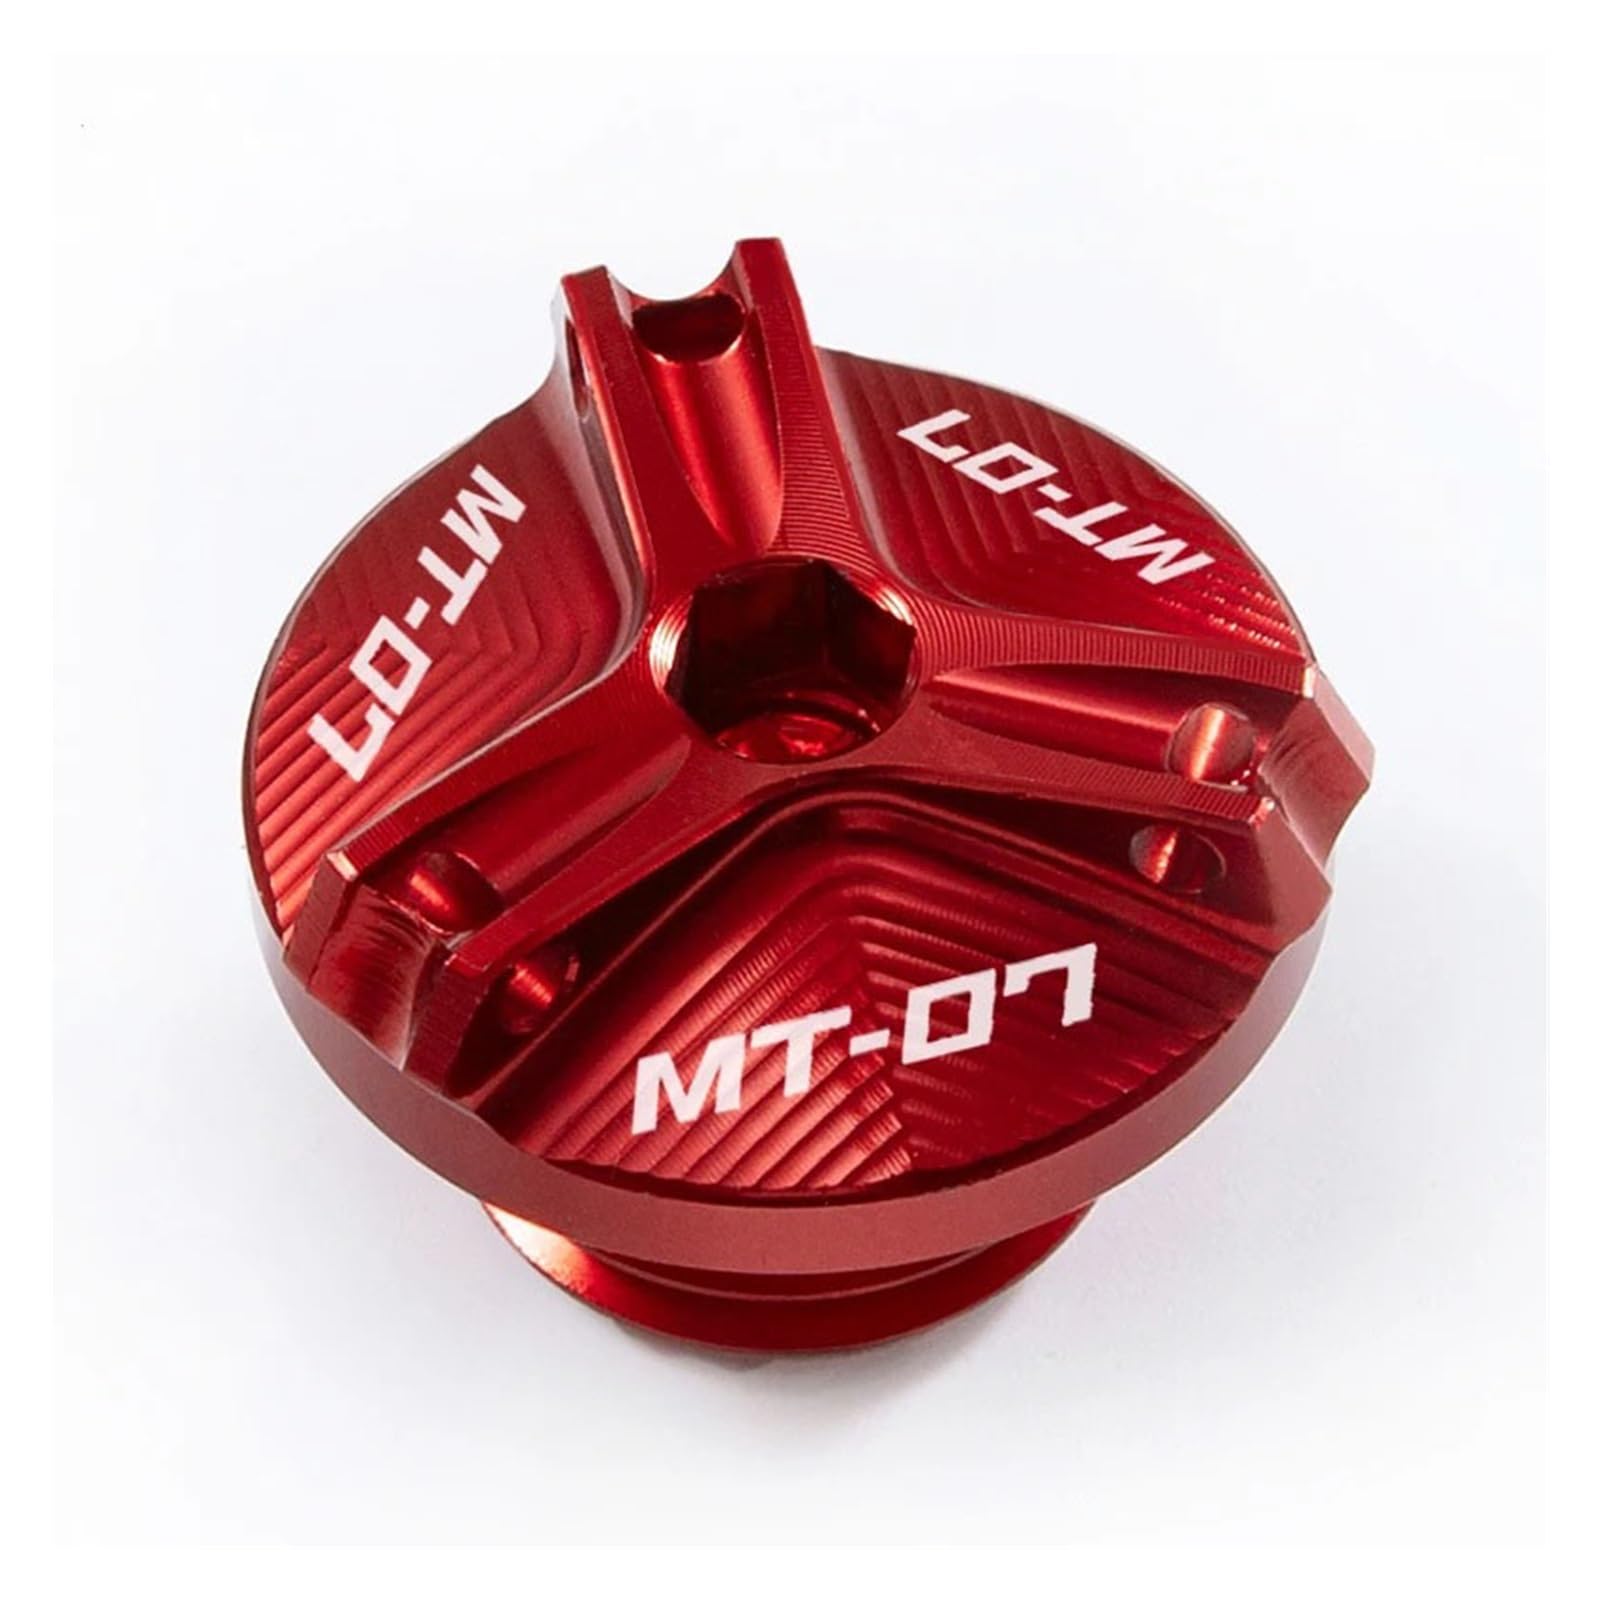 AQXYWQLL Kompatibel mit MT07 MT-07 FZ07 MT 07 2014 2015 2016 2017 2018 2019 2020 2021 2022 Motoröl-Einfülldeckel-Schutzzubehör(MT07 red) von AQXYWQLL